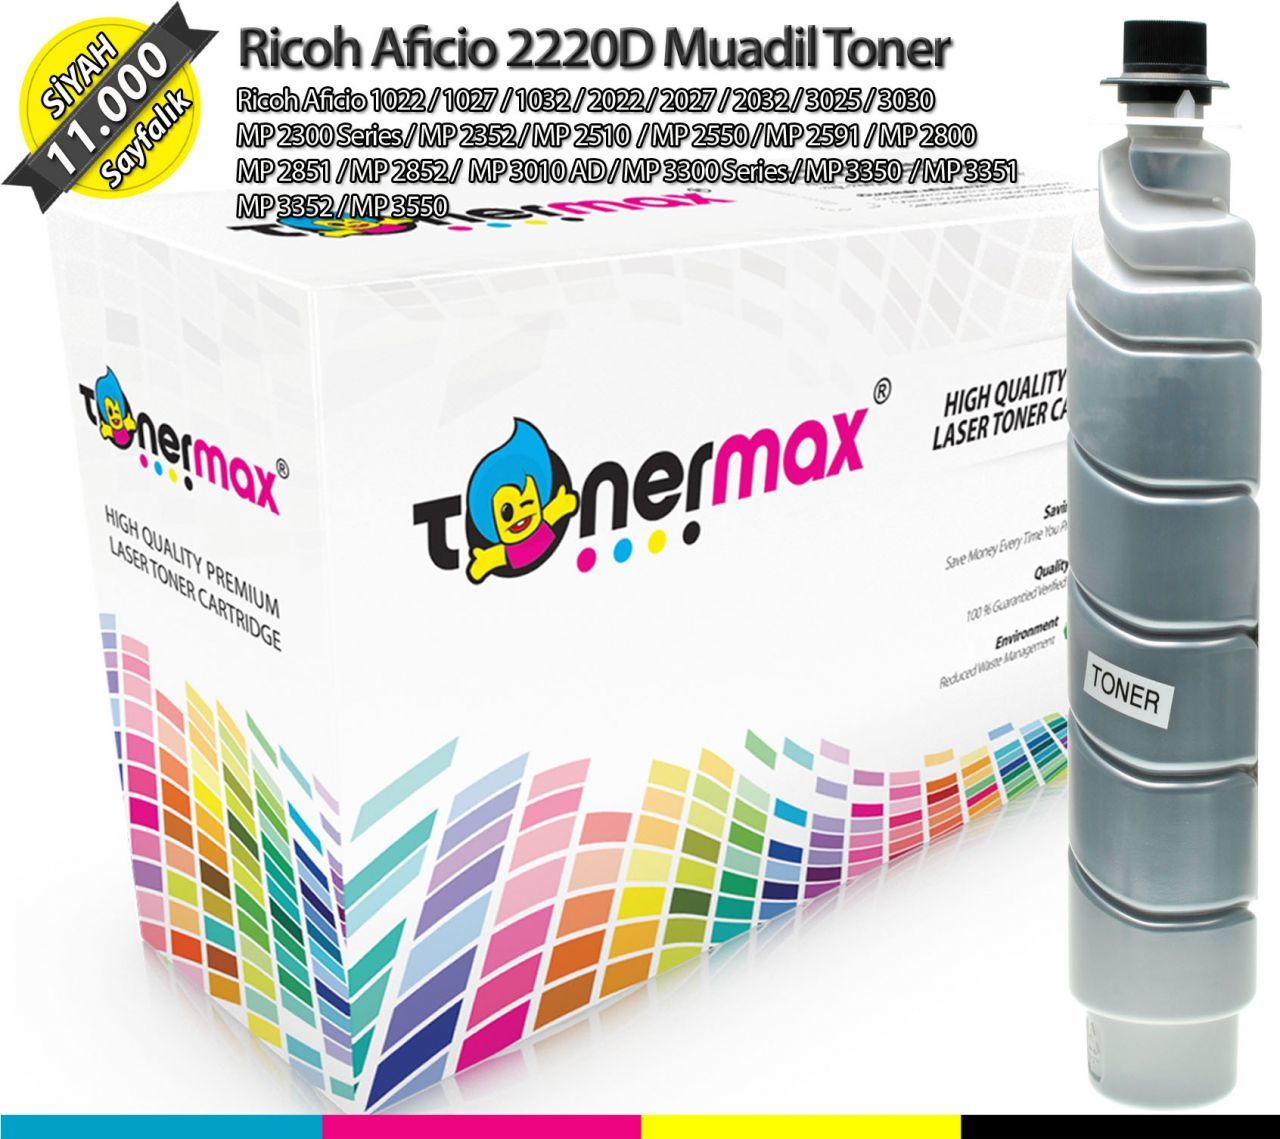 Ricoh Aficio 2220D Muadil  Toner/ 1022 / 1027 / 1032 / 2027 / 2032 / 2510 / 3025 / 3030 / 3500 / 2025